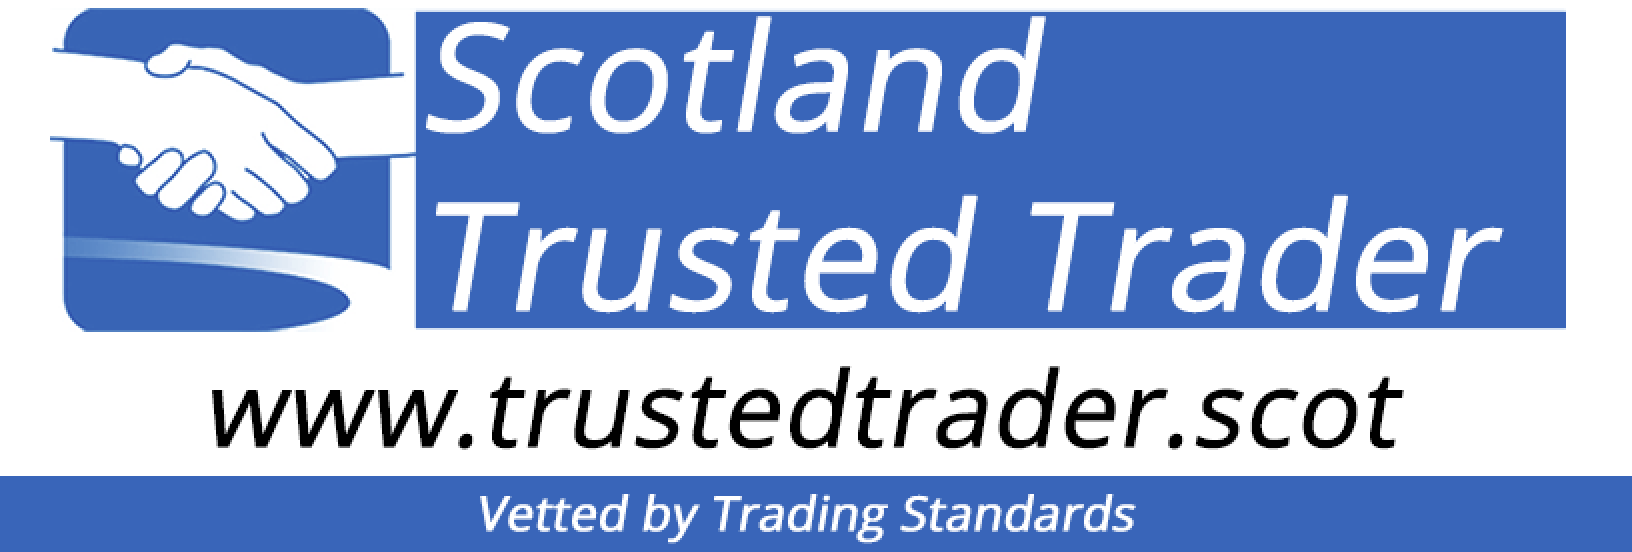 Scotland Trusted Trader Logo